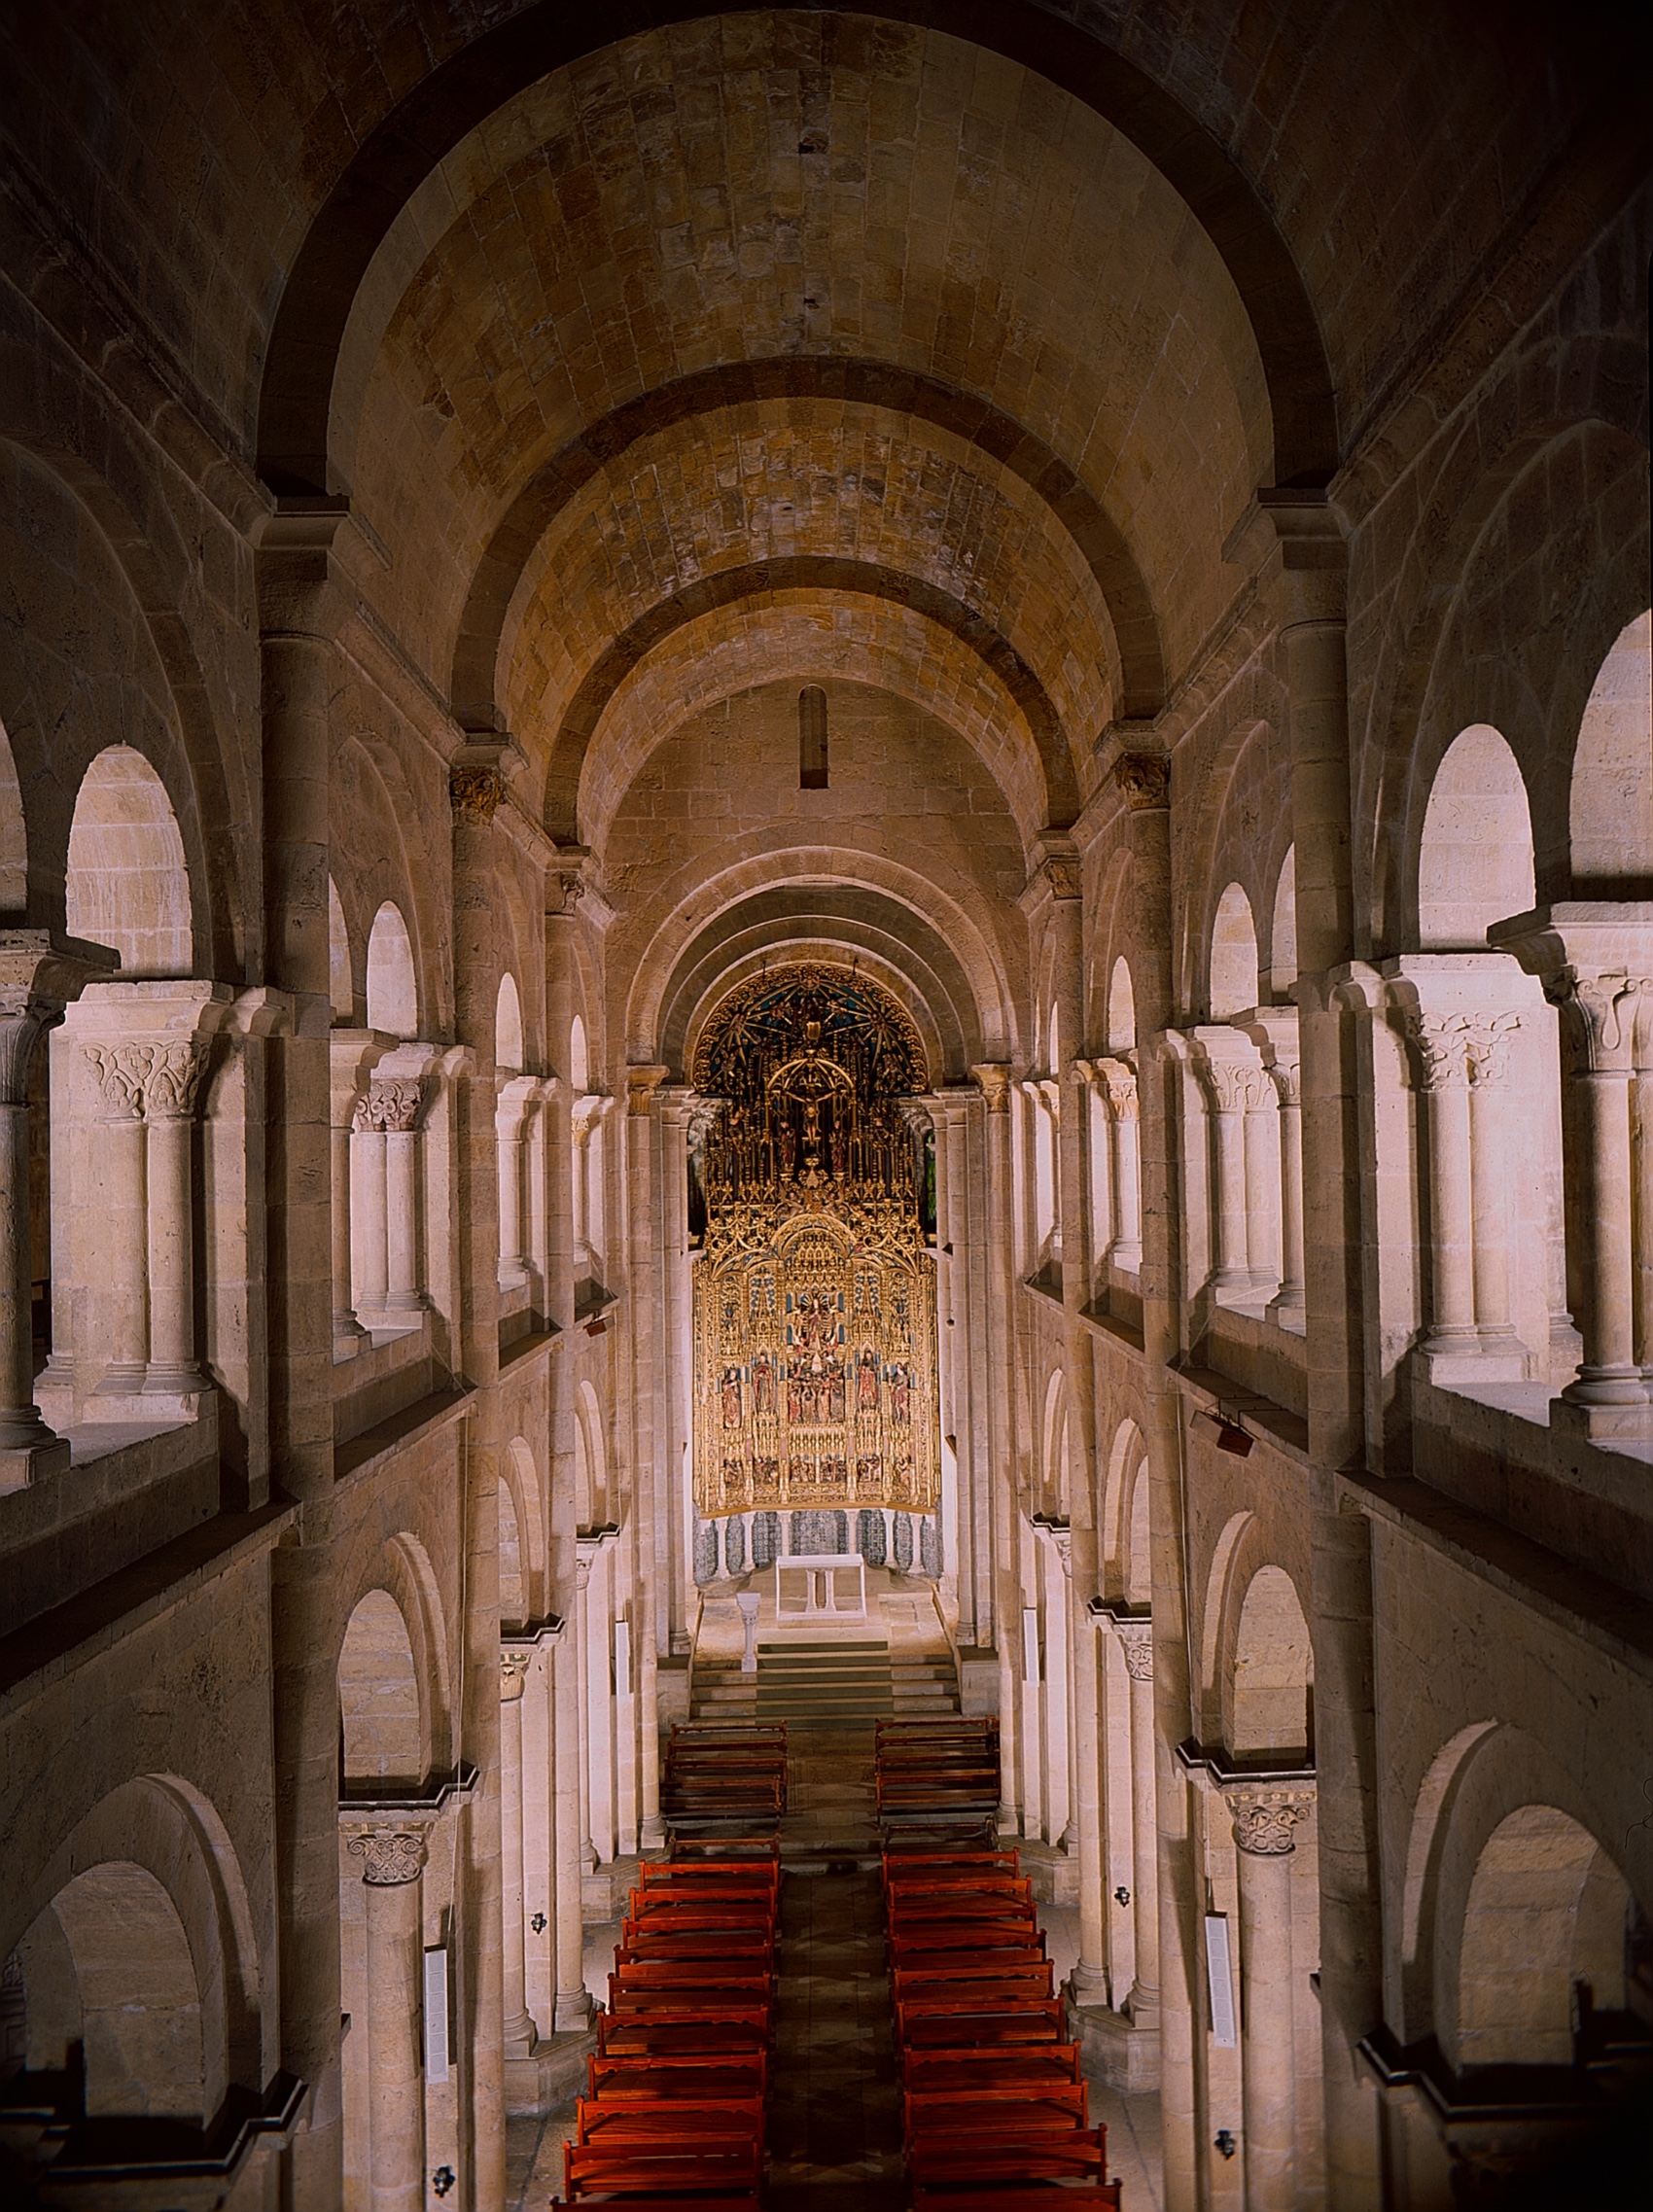 Turismo Centro de Portugal - Coimbra Historical City Tour monastery inside